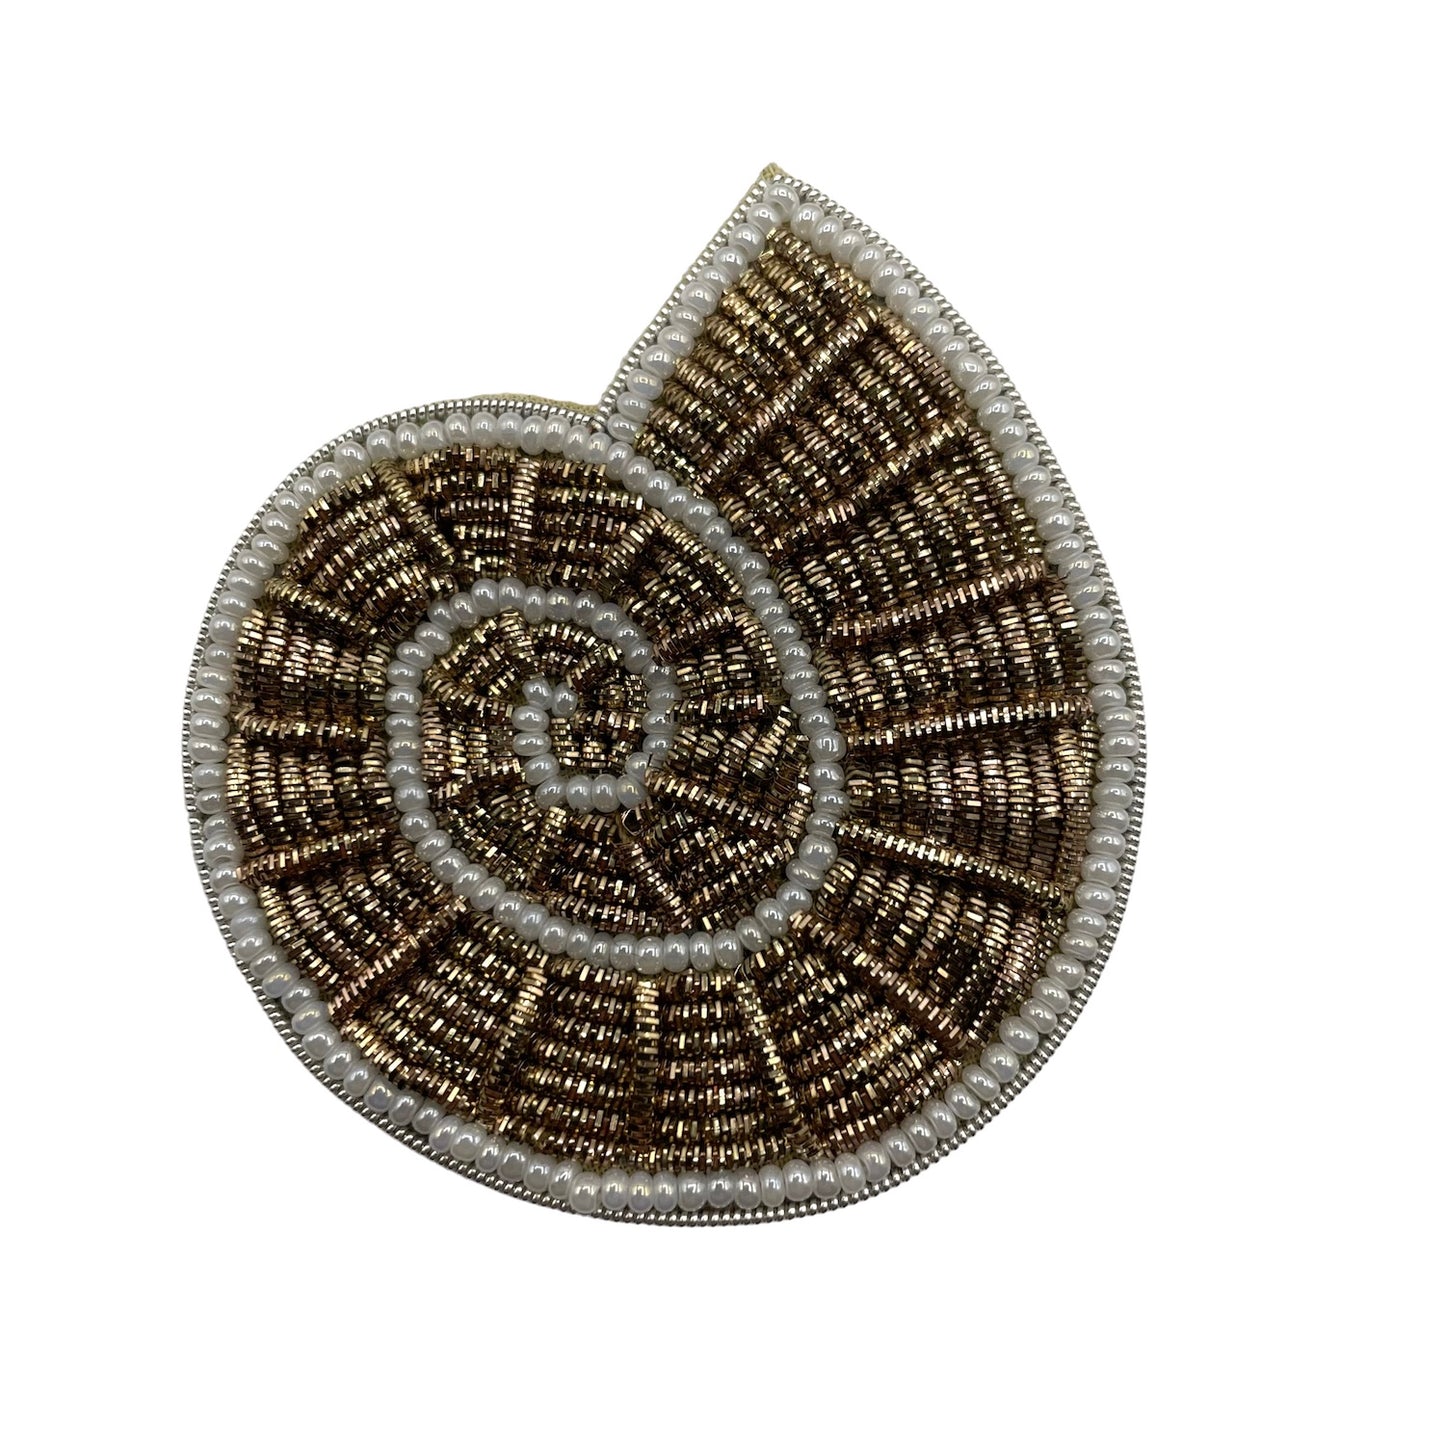 Spiral shell pin